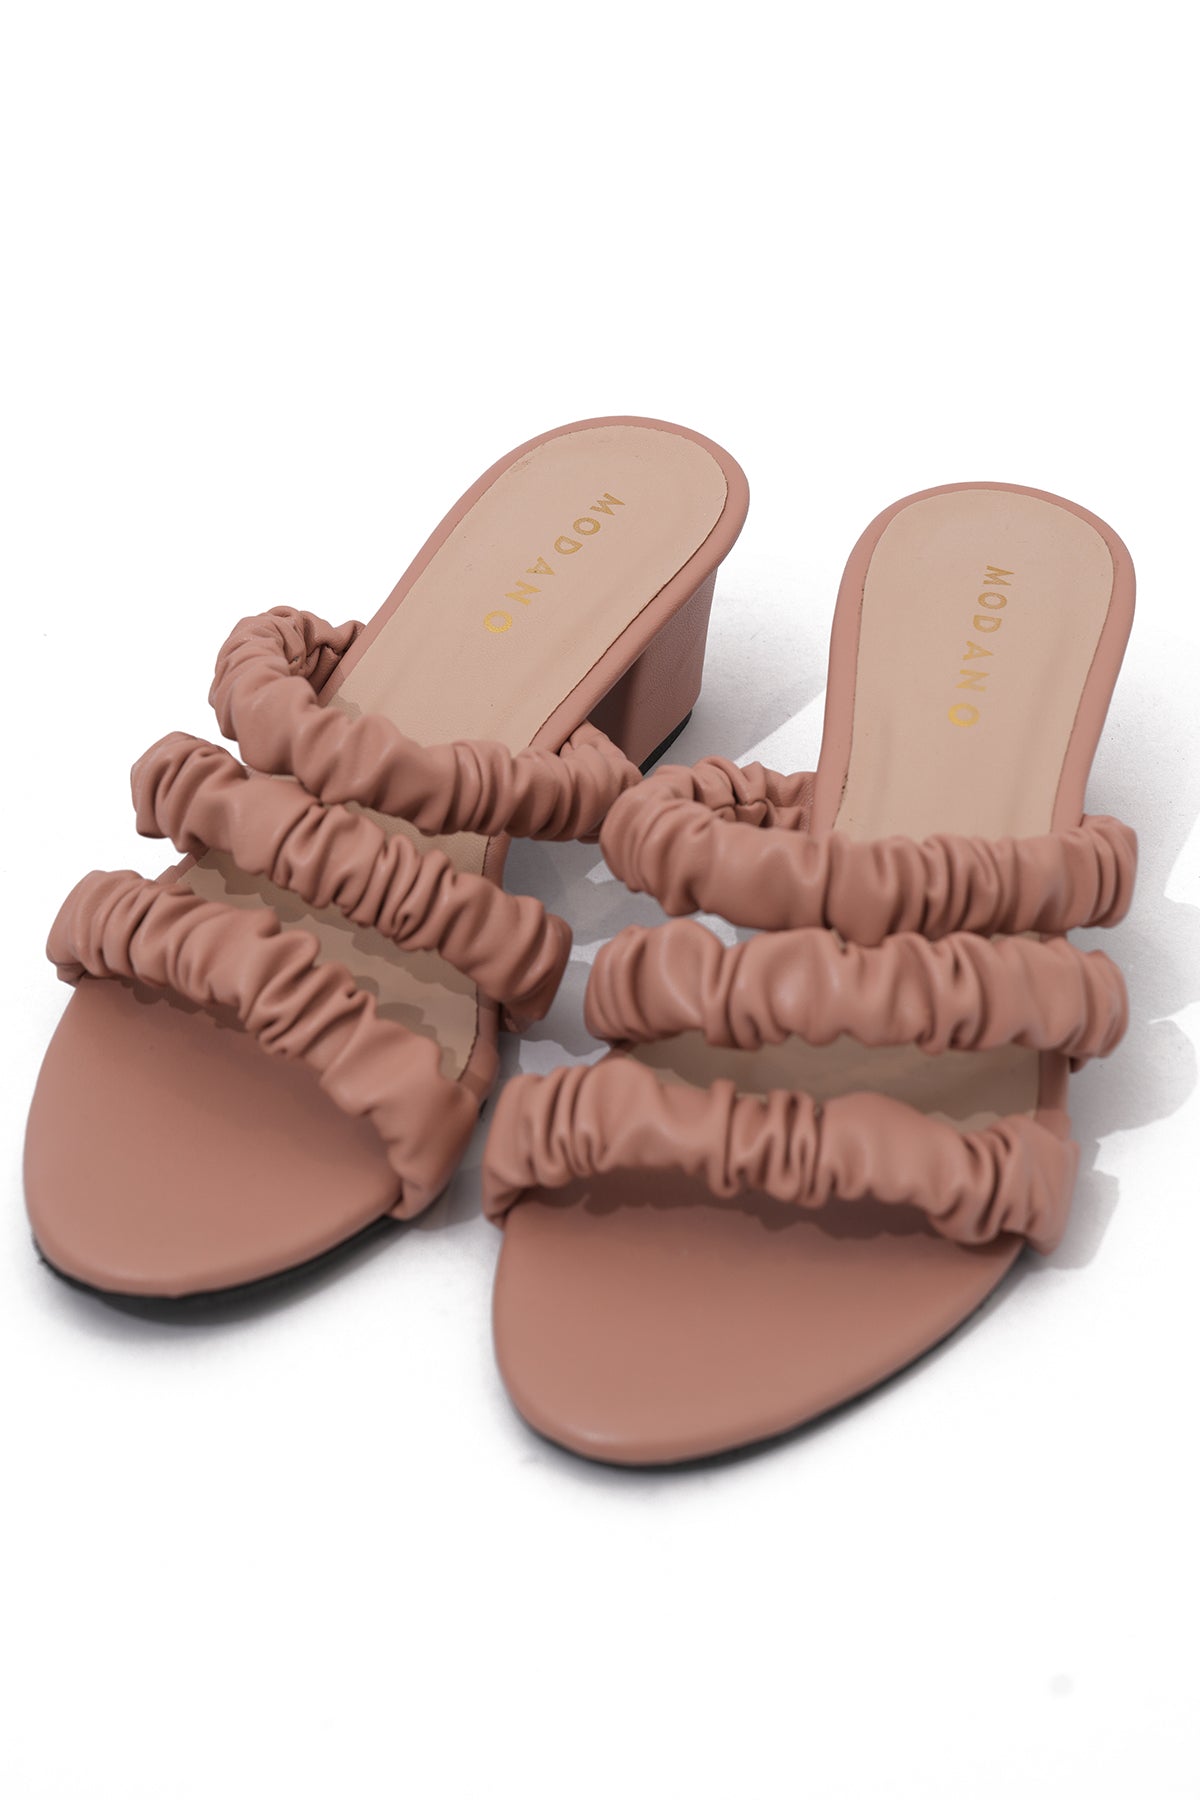 Modano Women's Casual Shoe